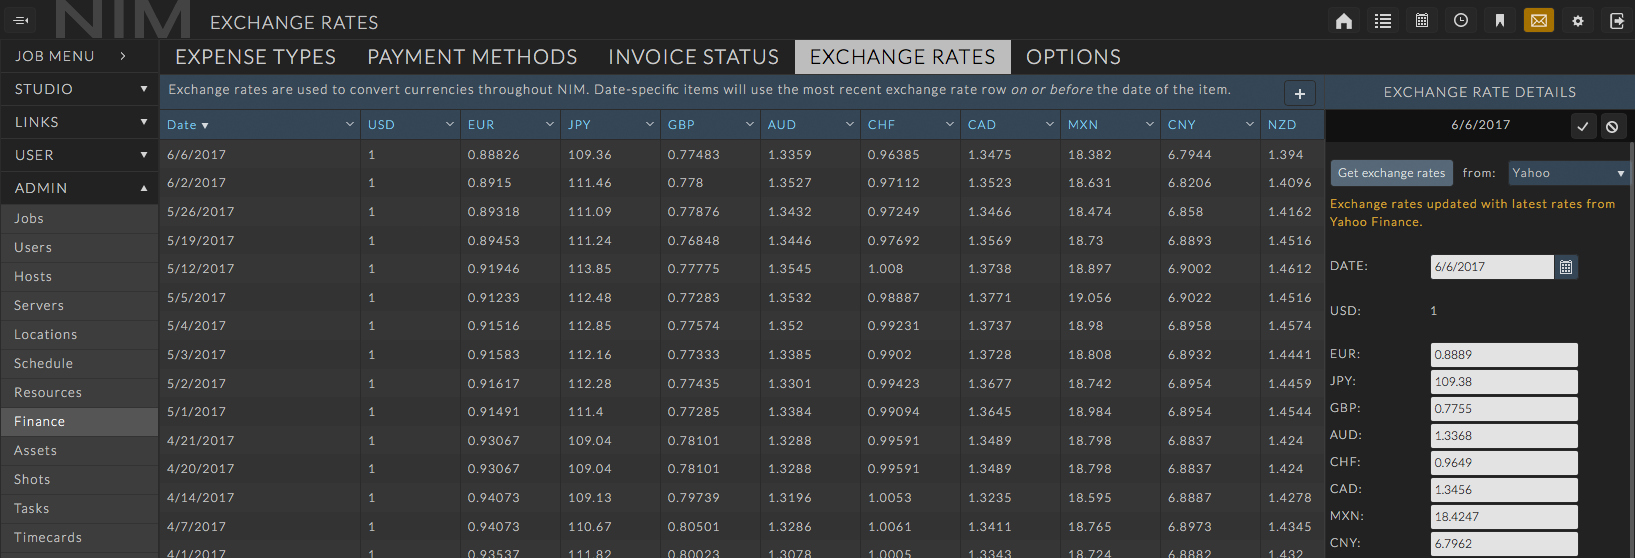 _images/nim_finance_exchange_rates.png